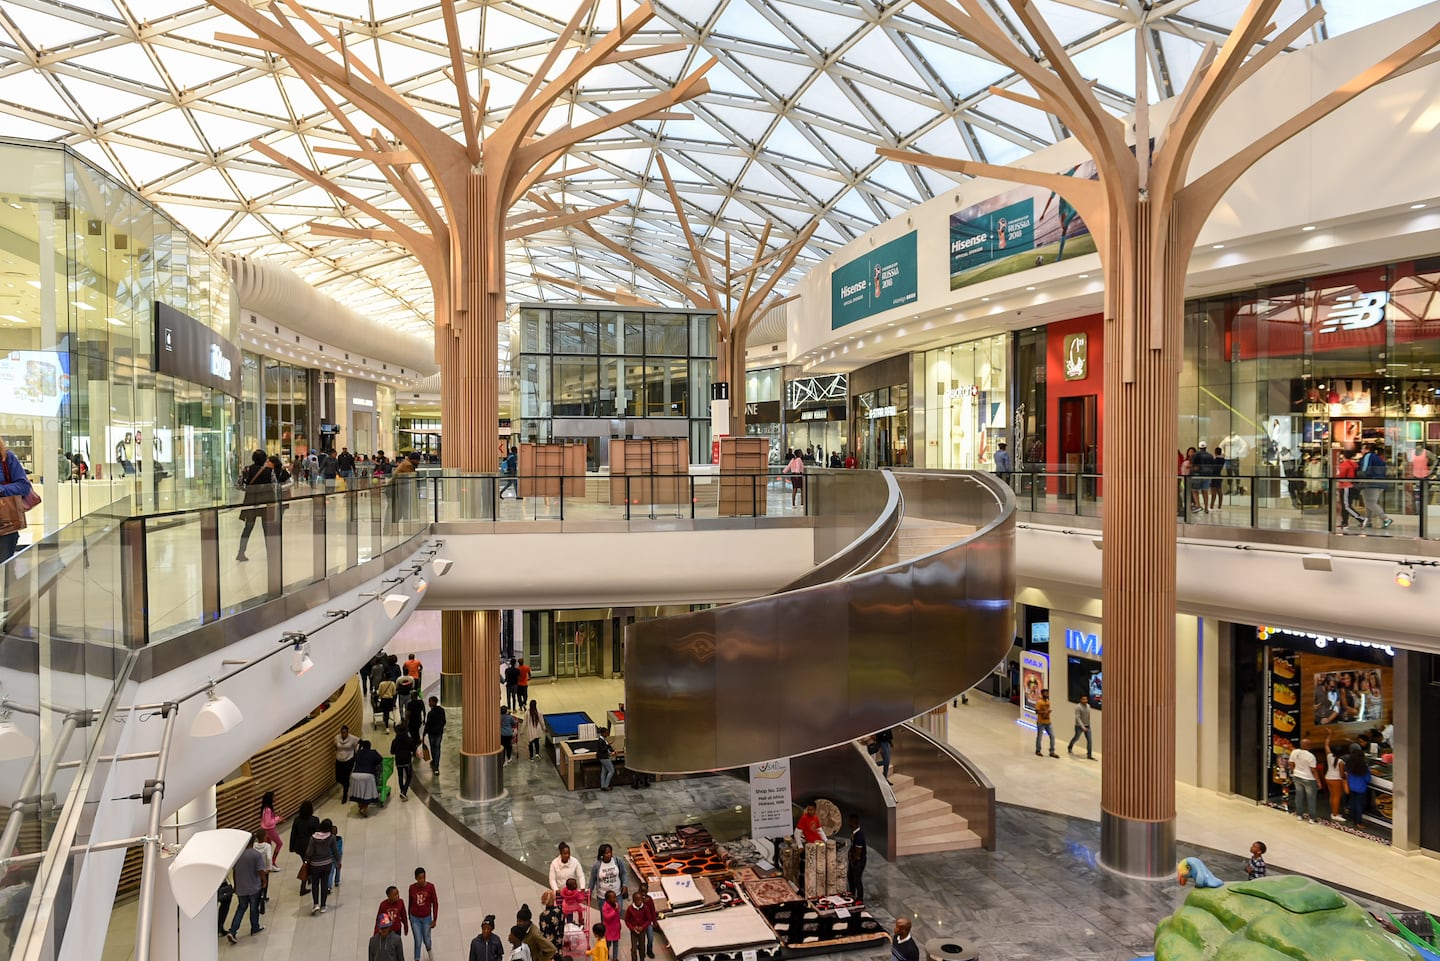 Inside Africa's biggest mall, The Mall of Africa, in Johannesburg. Shutterstock.